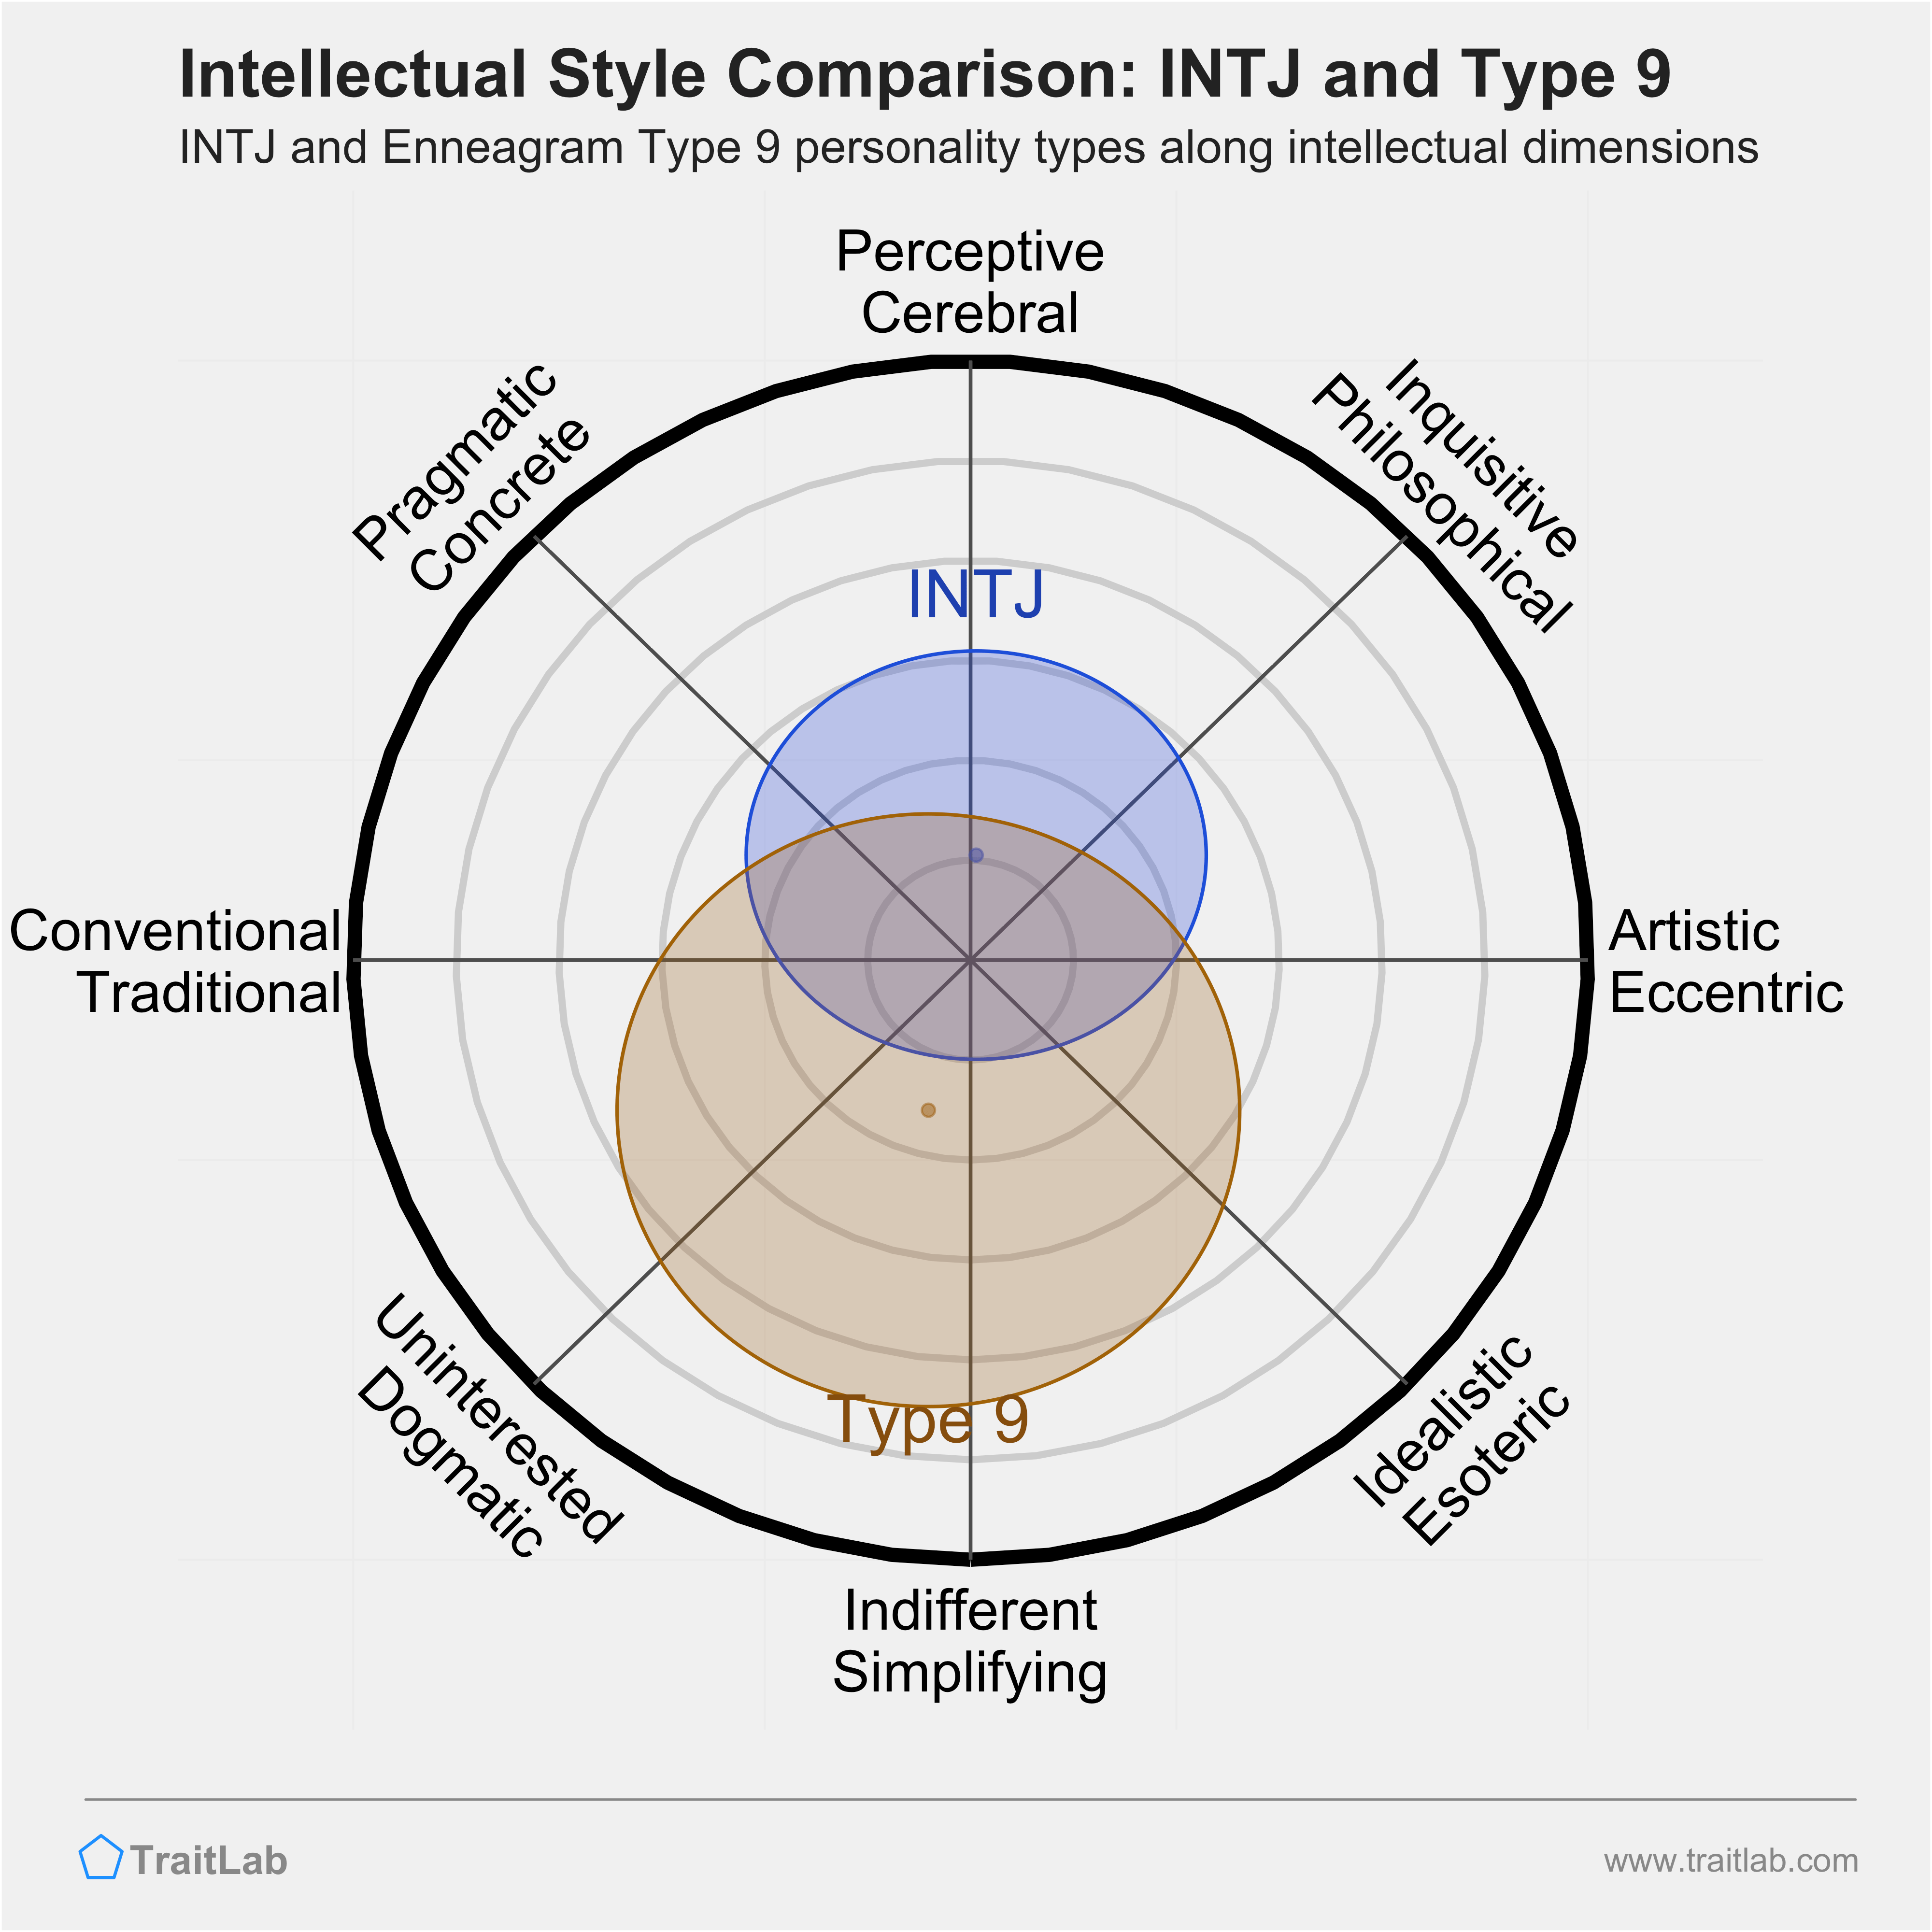 INTJ and Type 9 comparison across intellectual dimensions